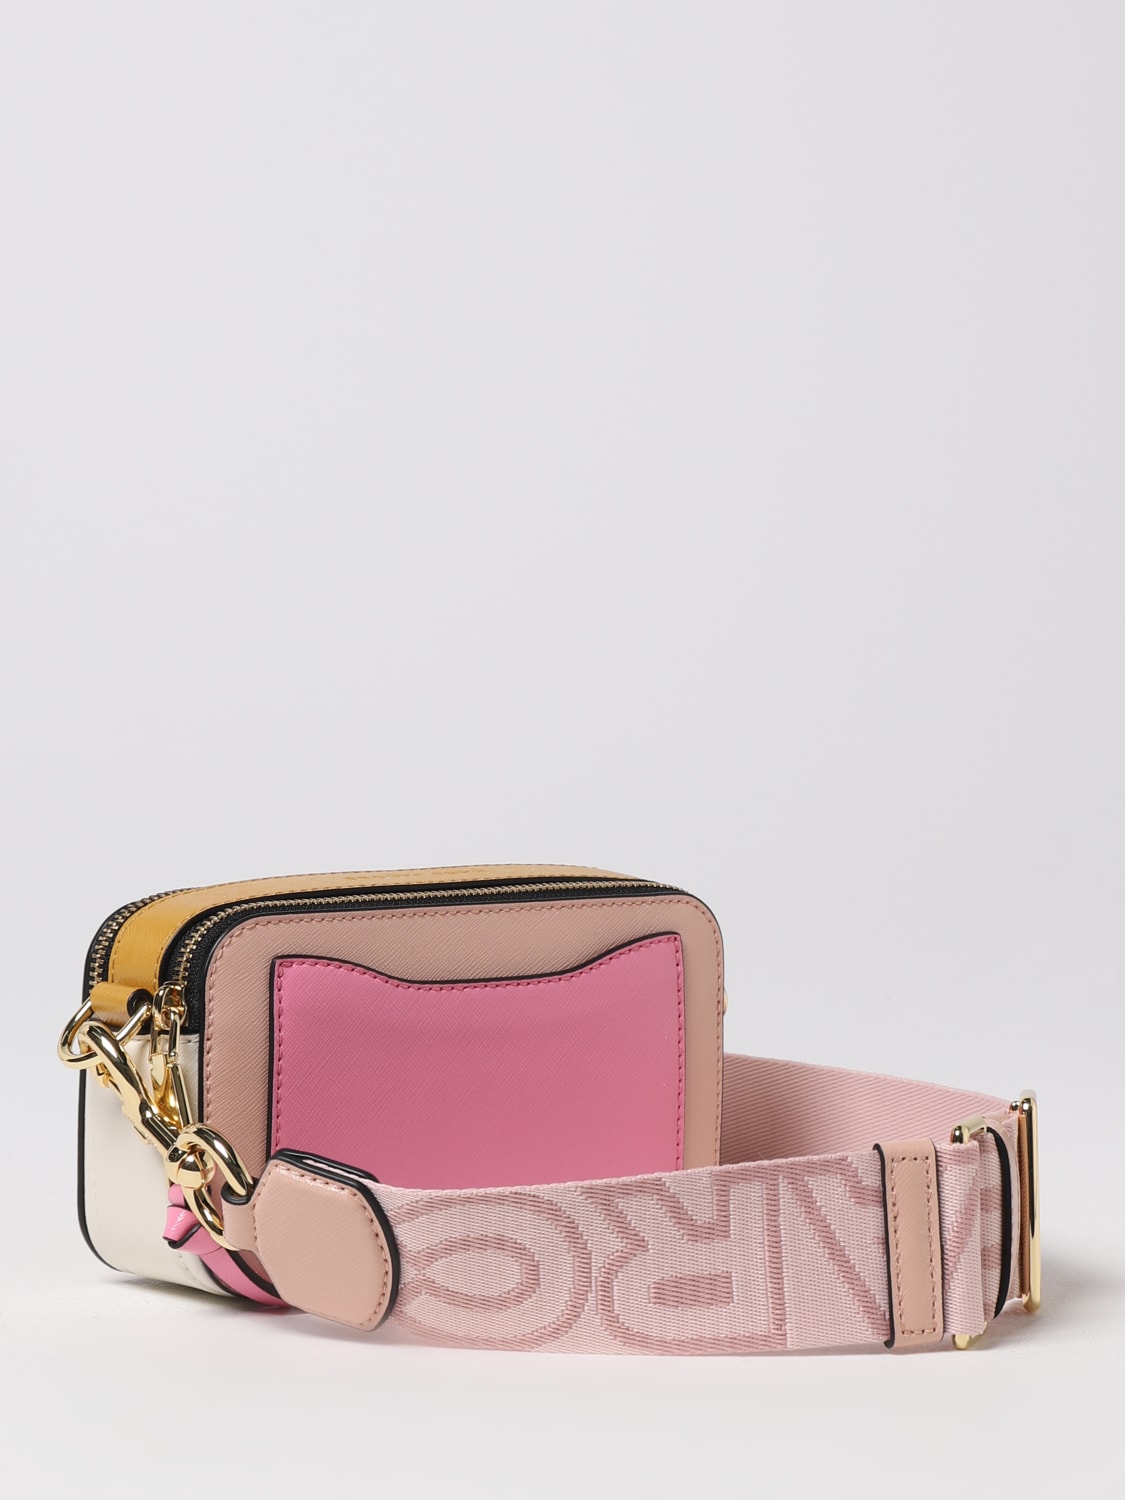 Handbags Marc Jacobs, Style code: 2s3hcr500h03-695- in 2023